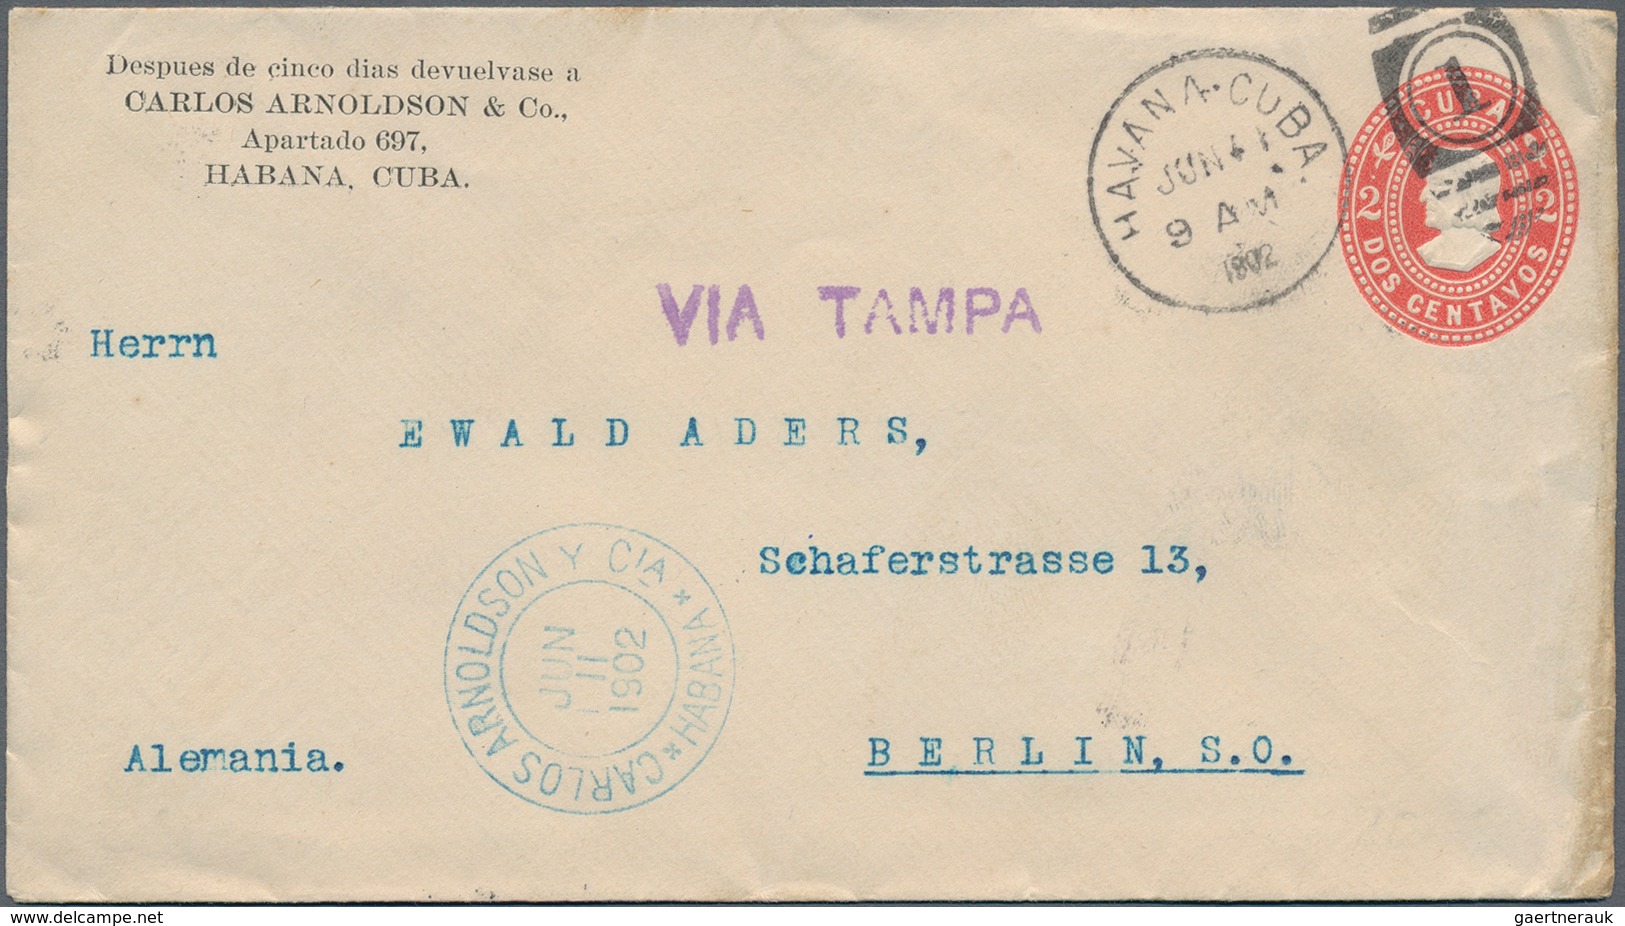 Karibik: 1908/70 (ca.), Covers/used Stationery Of Cuba (23), Dominican Republic (11), Haiti (5) And - Sonstige - Amerika